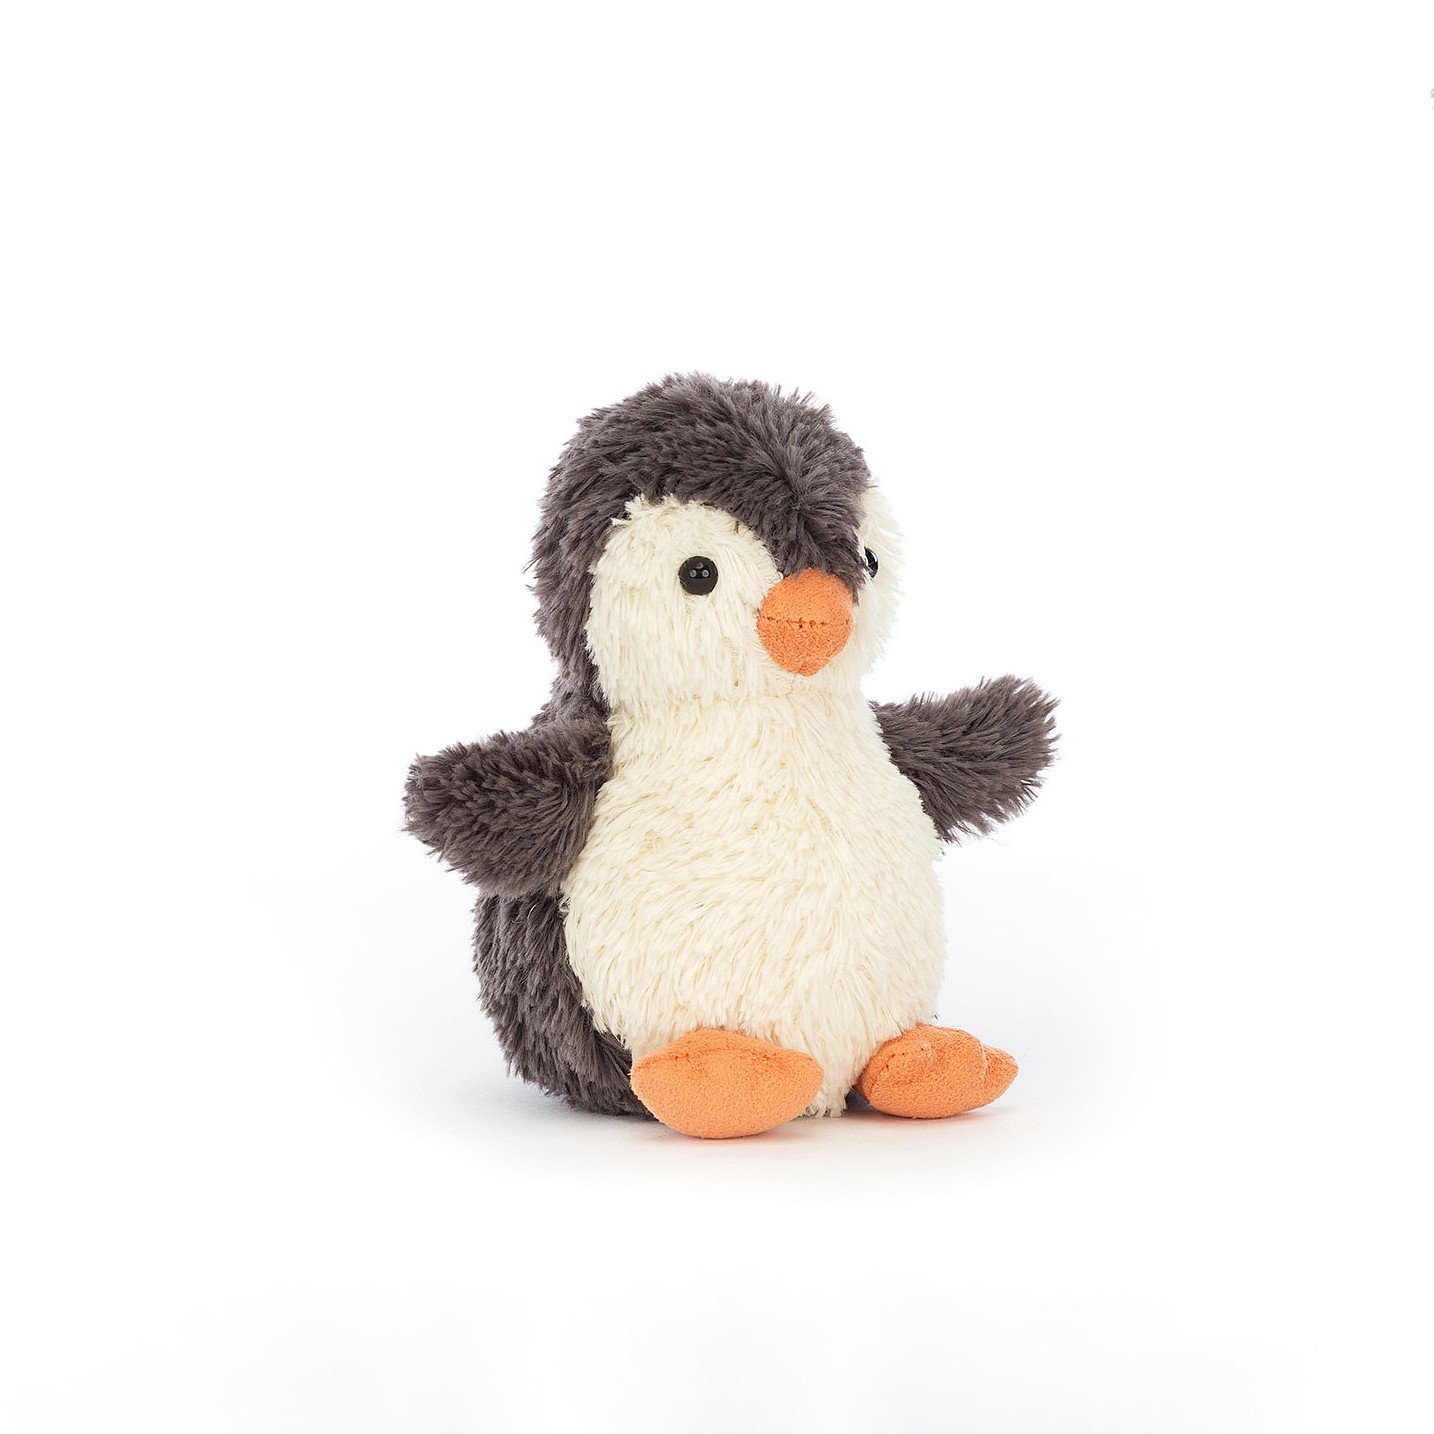 Buy Peanut Penguin - Online at Jellycat.com